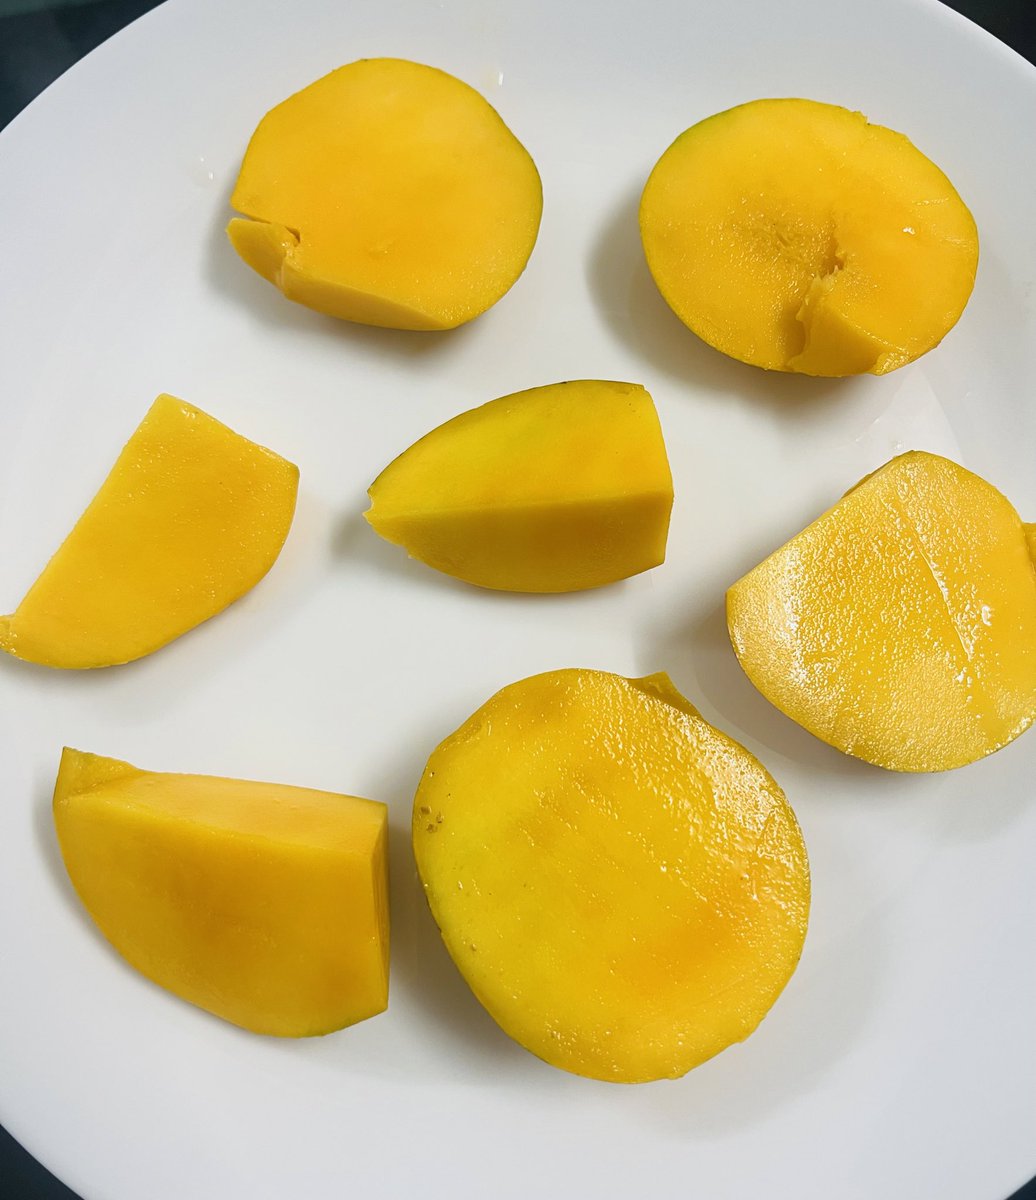 Manchi ga dinner thinna tarvatha fridge lo pettukunna mango cut chesukuni thinte swaragame 😋😋😋🥭🥭

#Food #RJY #EndOfTheSeason